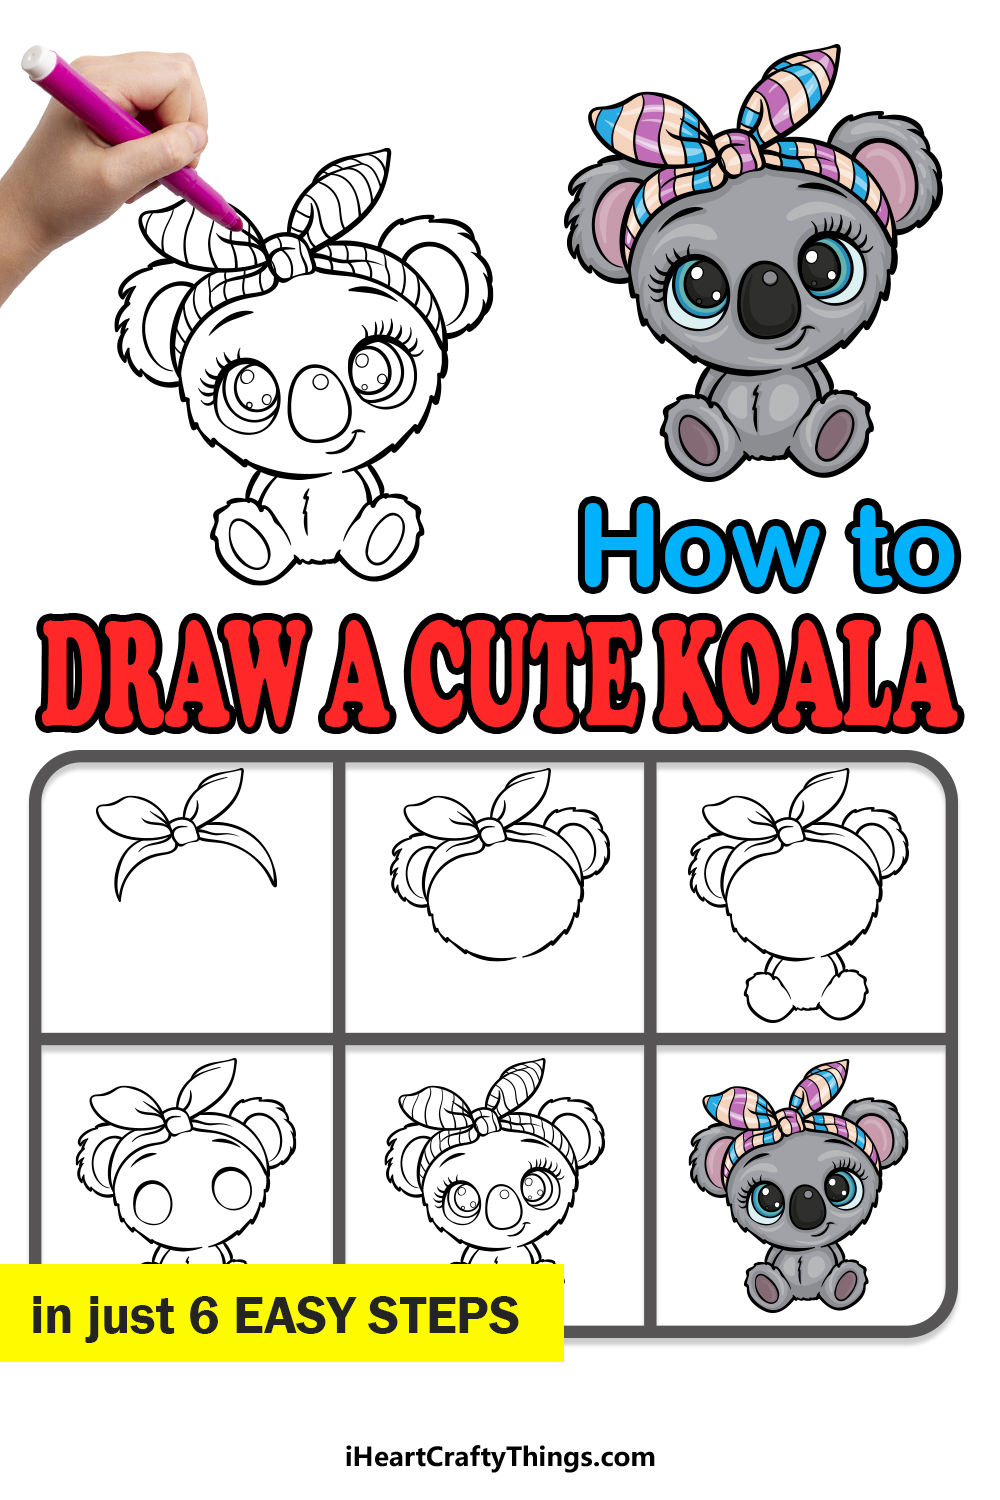 how to draw a Cute Koala in 6 easy steps